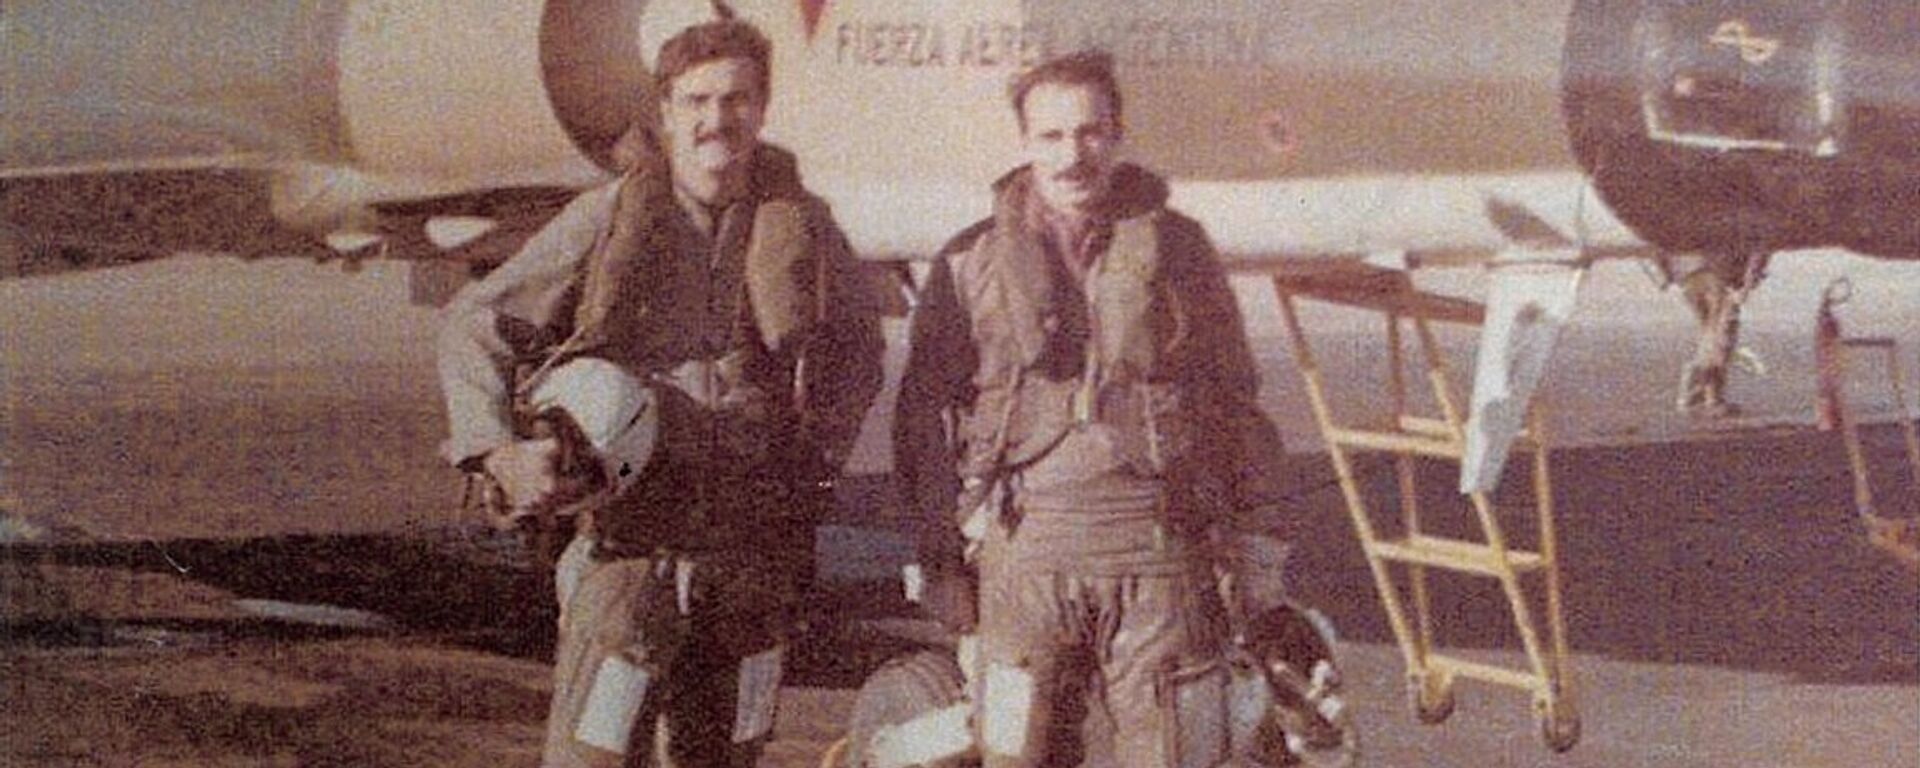 Brigadier Horacio Mir González junto a otro piloto - Sputnik Mundo, 1920, 21.03.2017